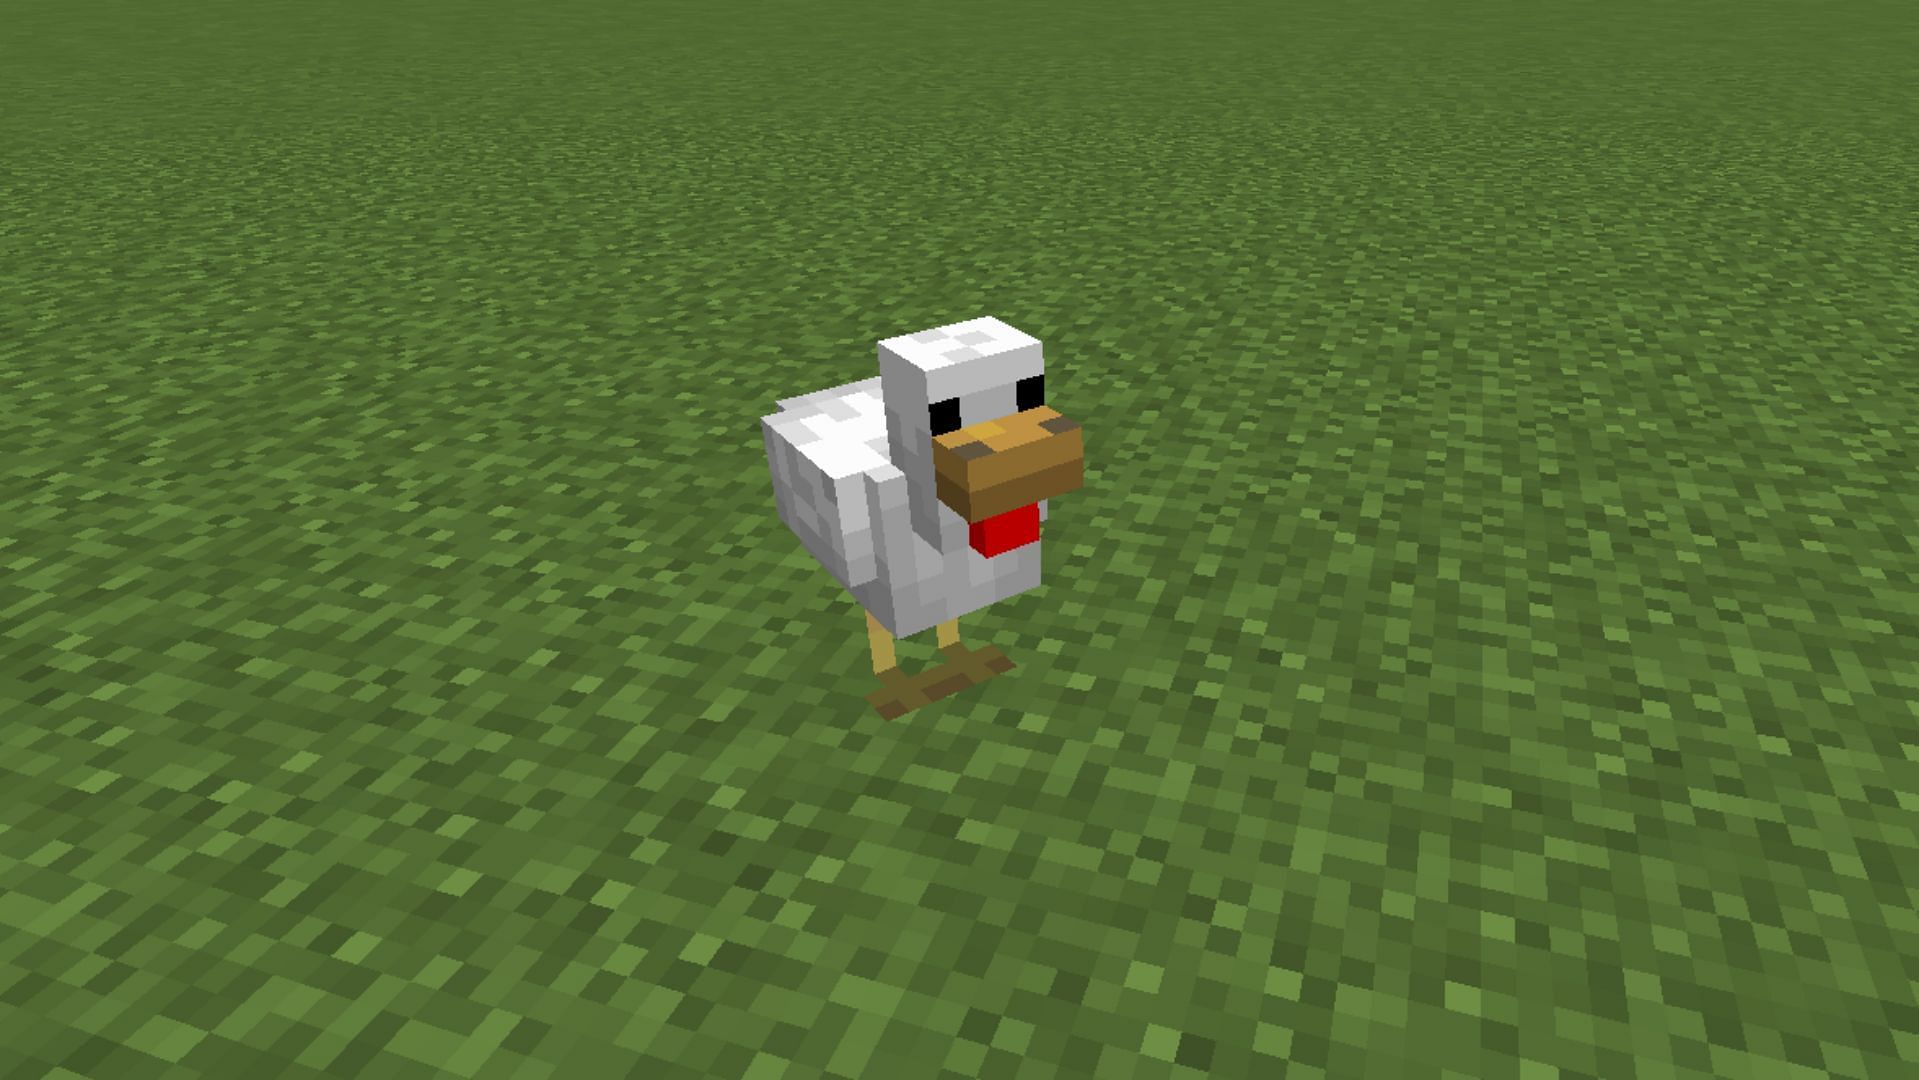 Chickens once broke Minecraft (Image via Mojang Studios)